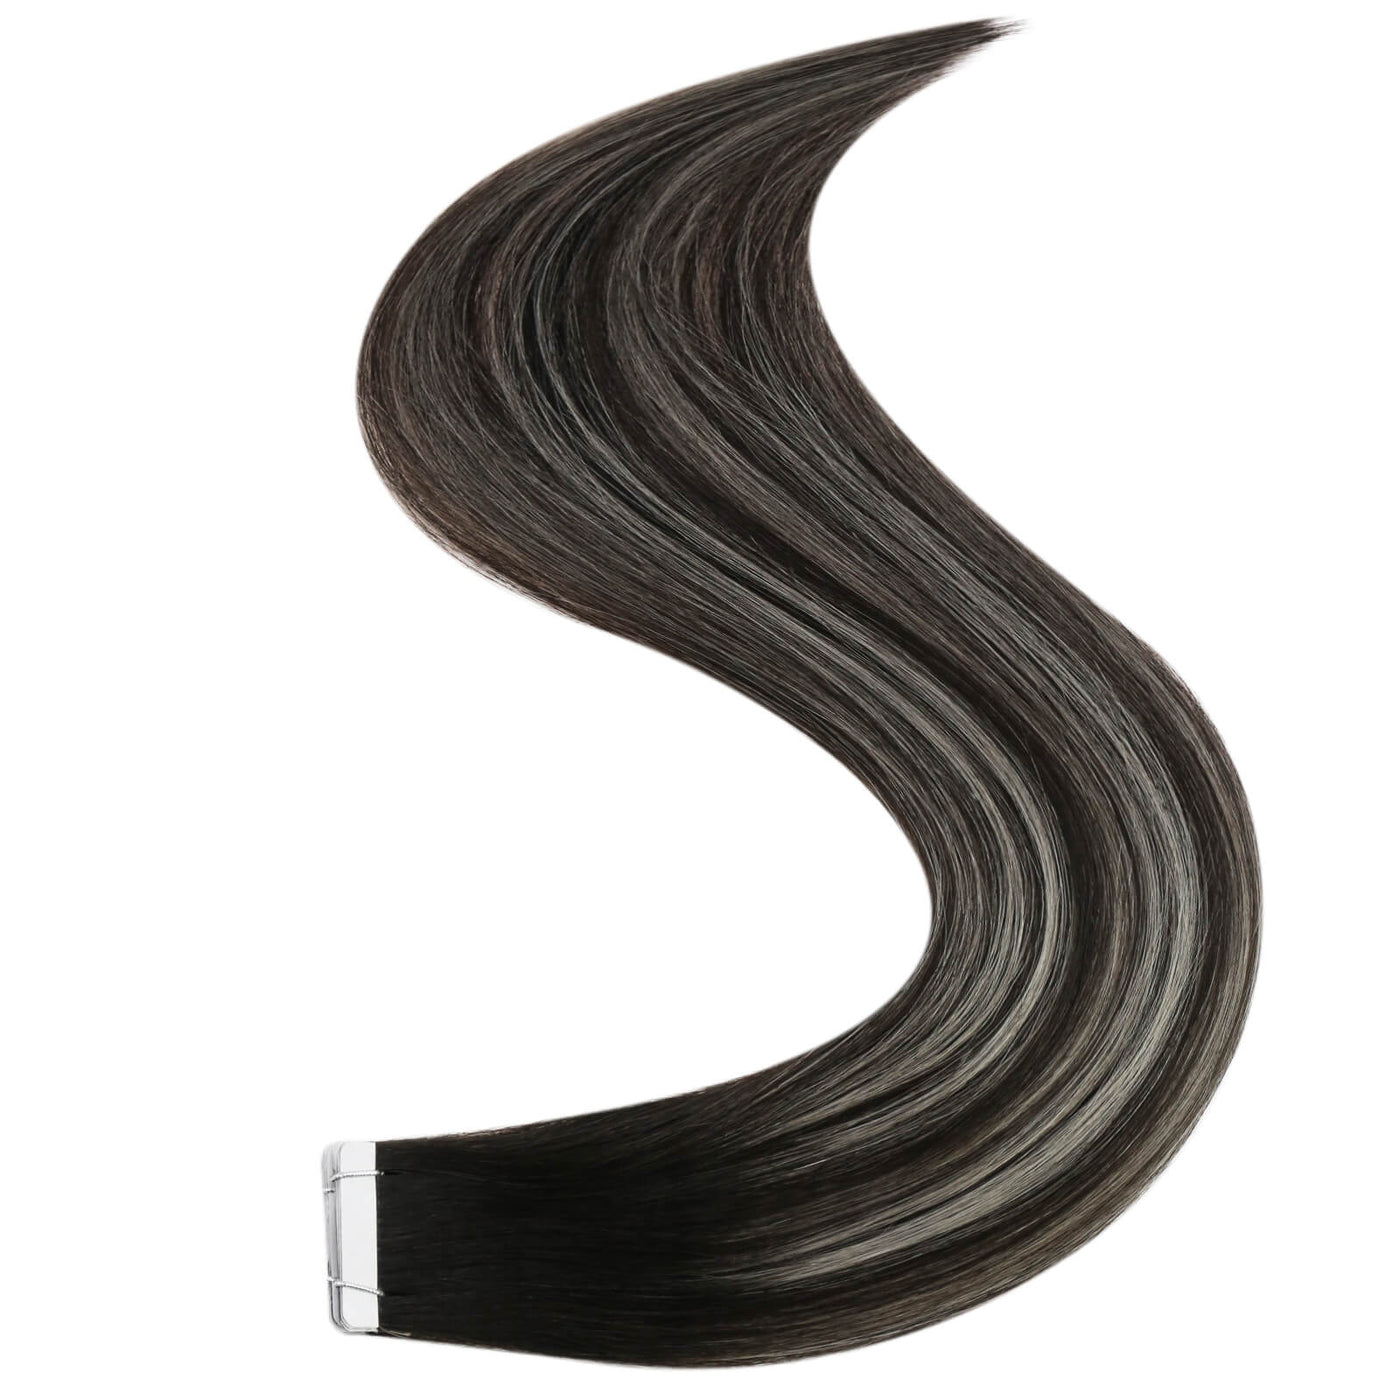 Ombre Brown Virgin Real Hair Extensions Skin Weft Hair Tape in Hair #1B/Silver/1B